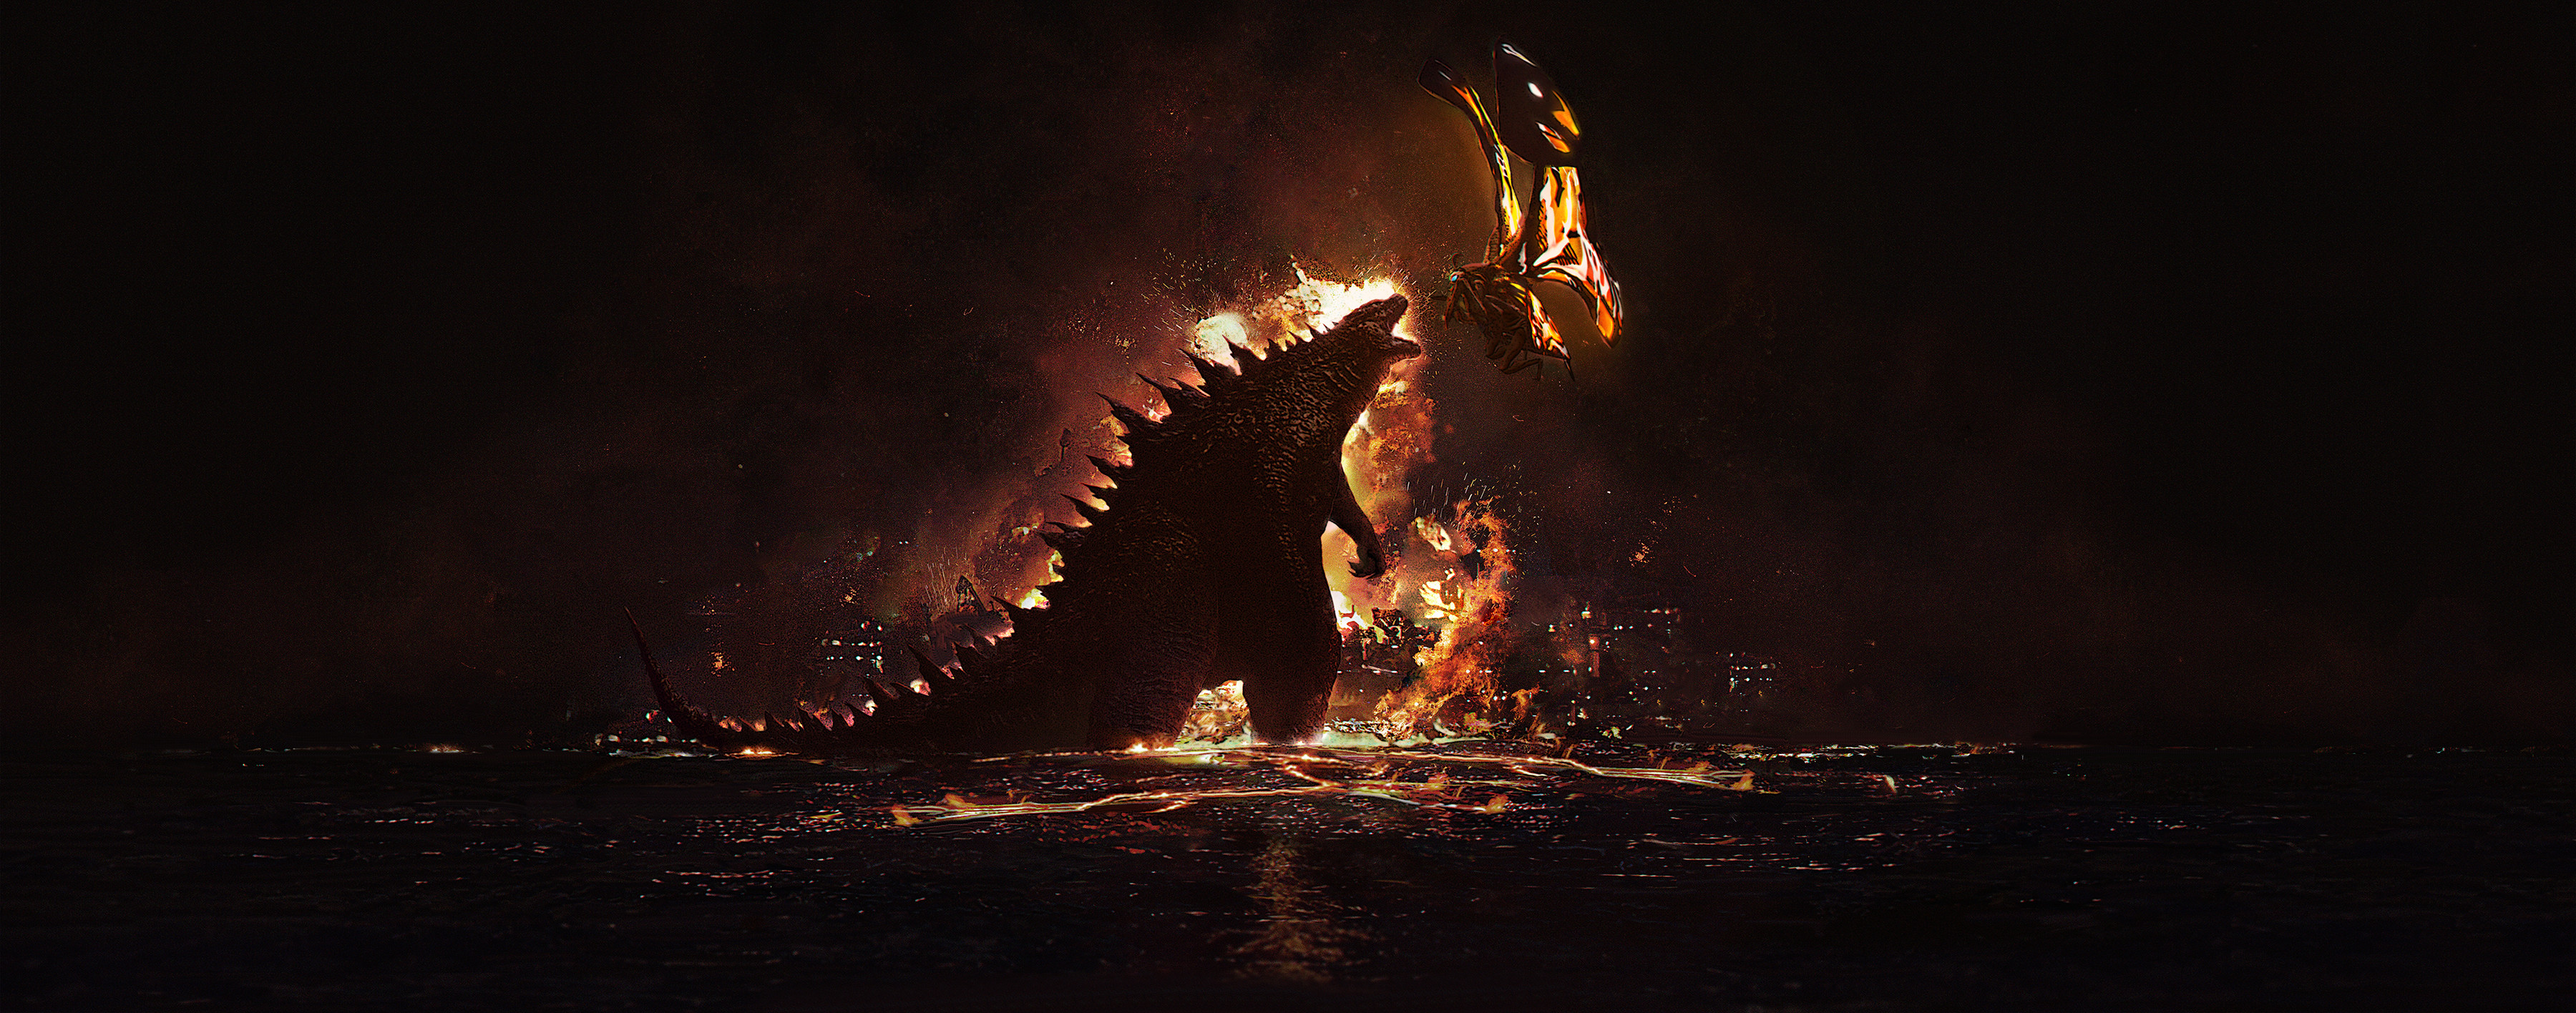 General 3600x1416 Godzilla artwork battle dark fire David Bocquillon Carrasco fighting Mothra movie characters